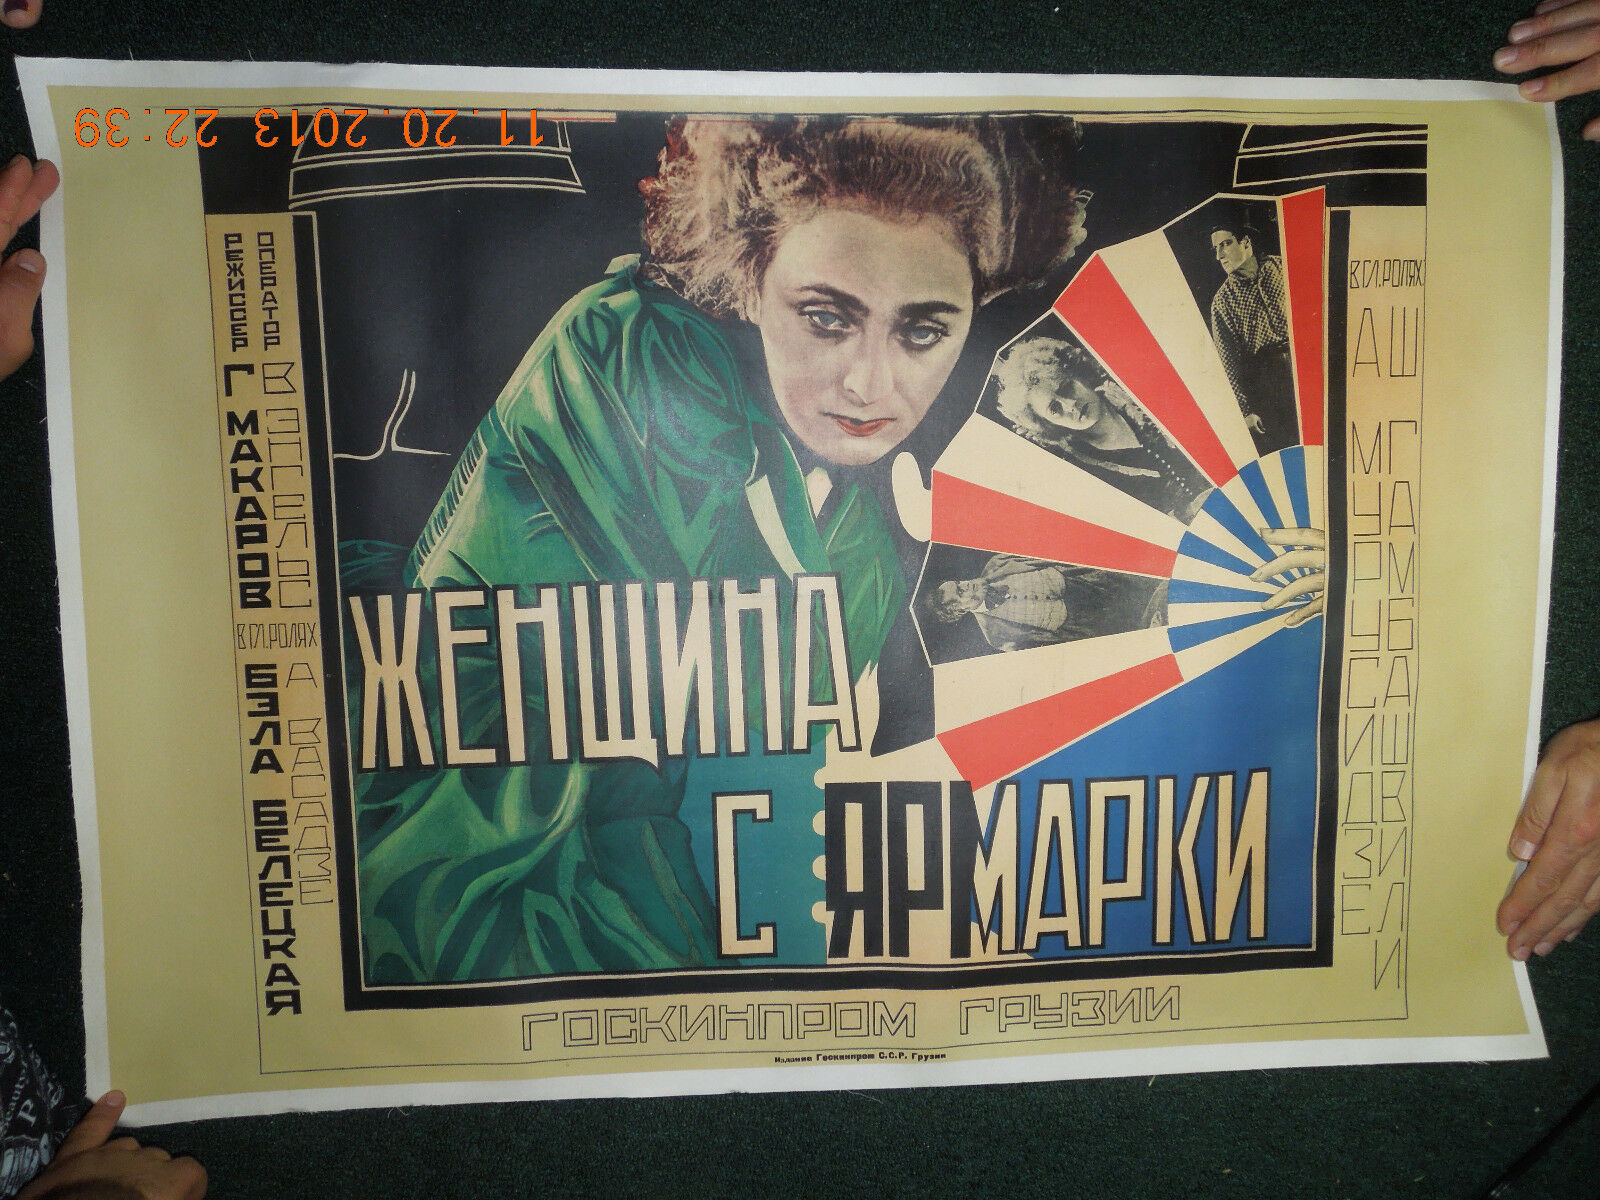 ORIGINAL AVANT-GARDE Poster Goskinprom Georgia 